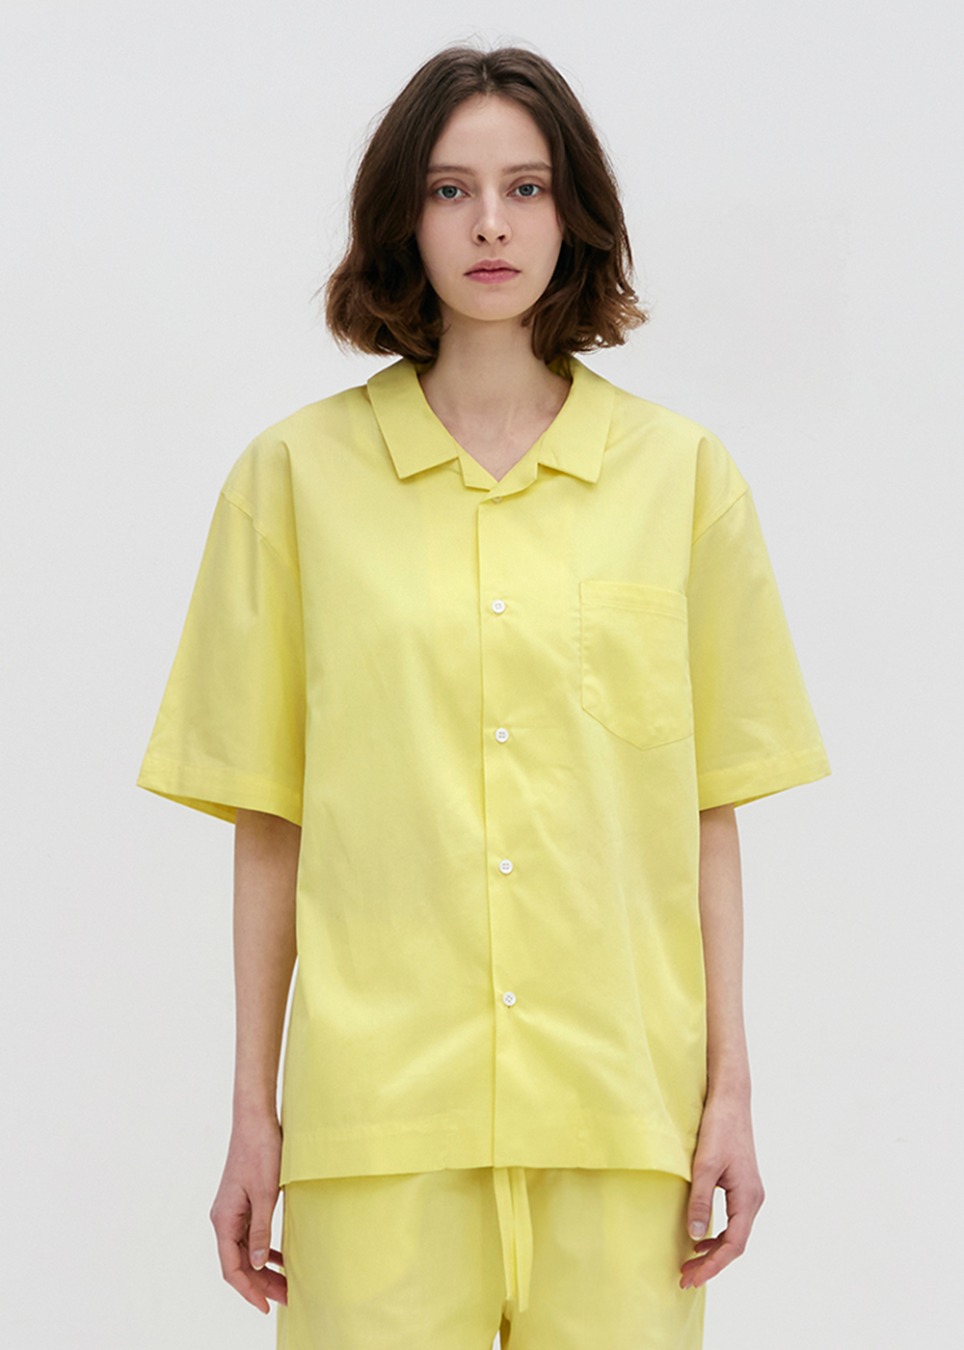 Stay Pajamas Short Sleeve Shirts - Lemon Yellow